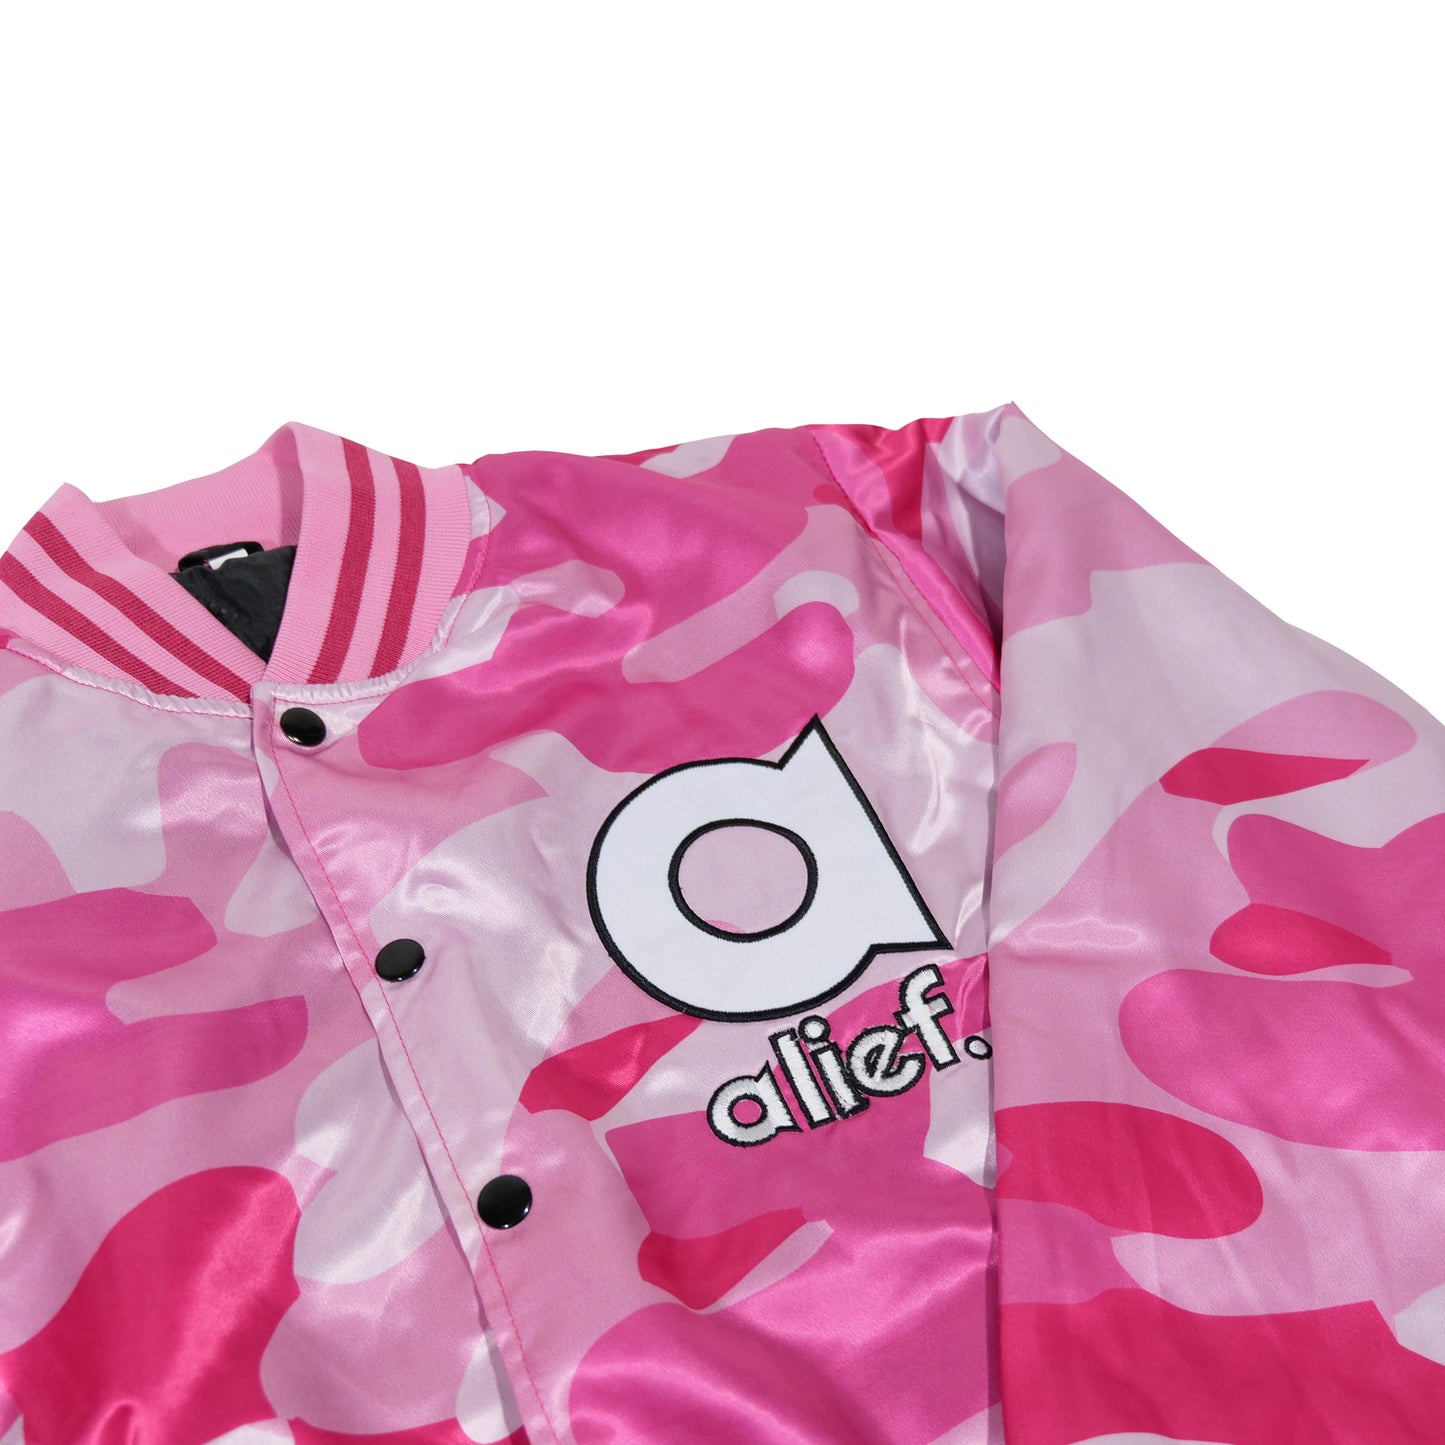 Alief Varsity Jacket -  Pink Camo